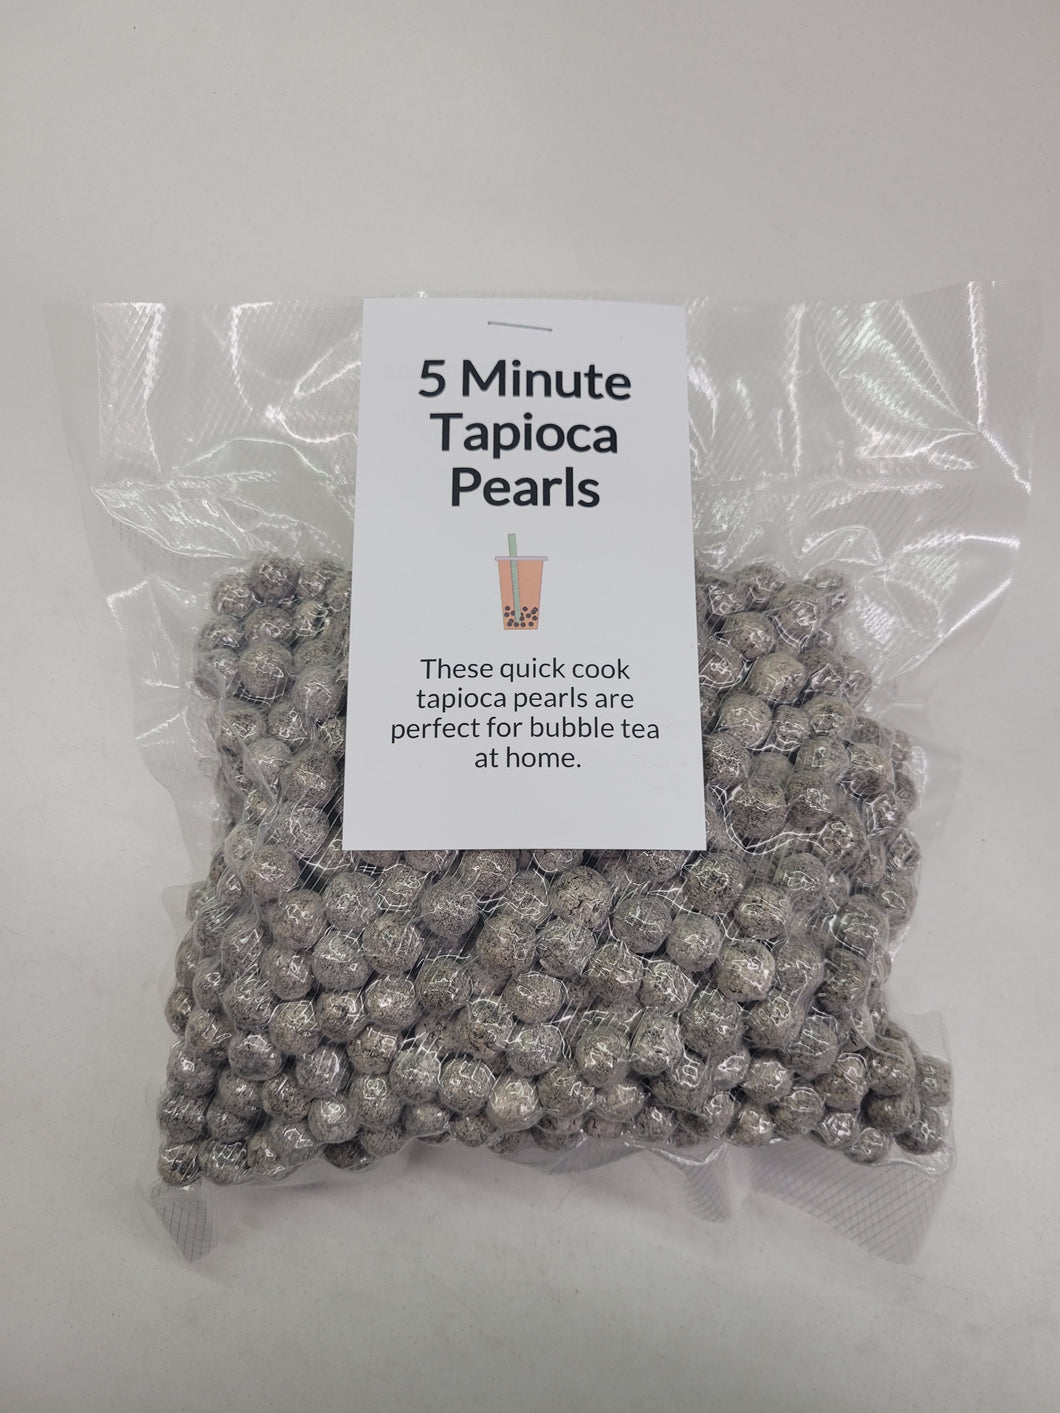 5 Minute Tapioca Pearls